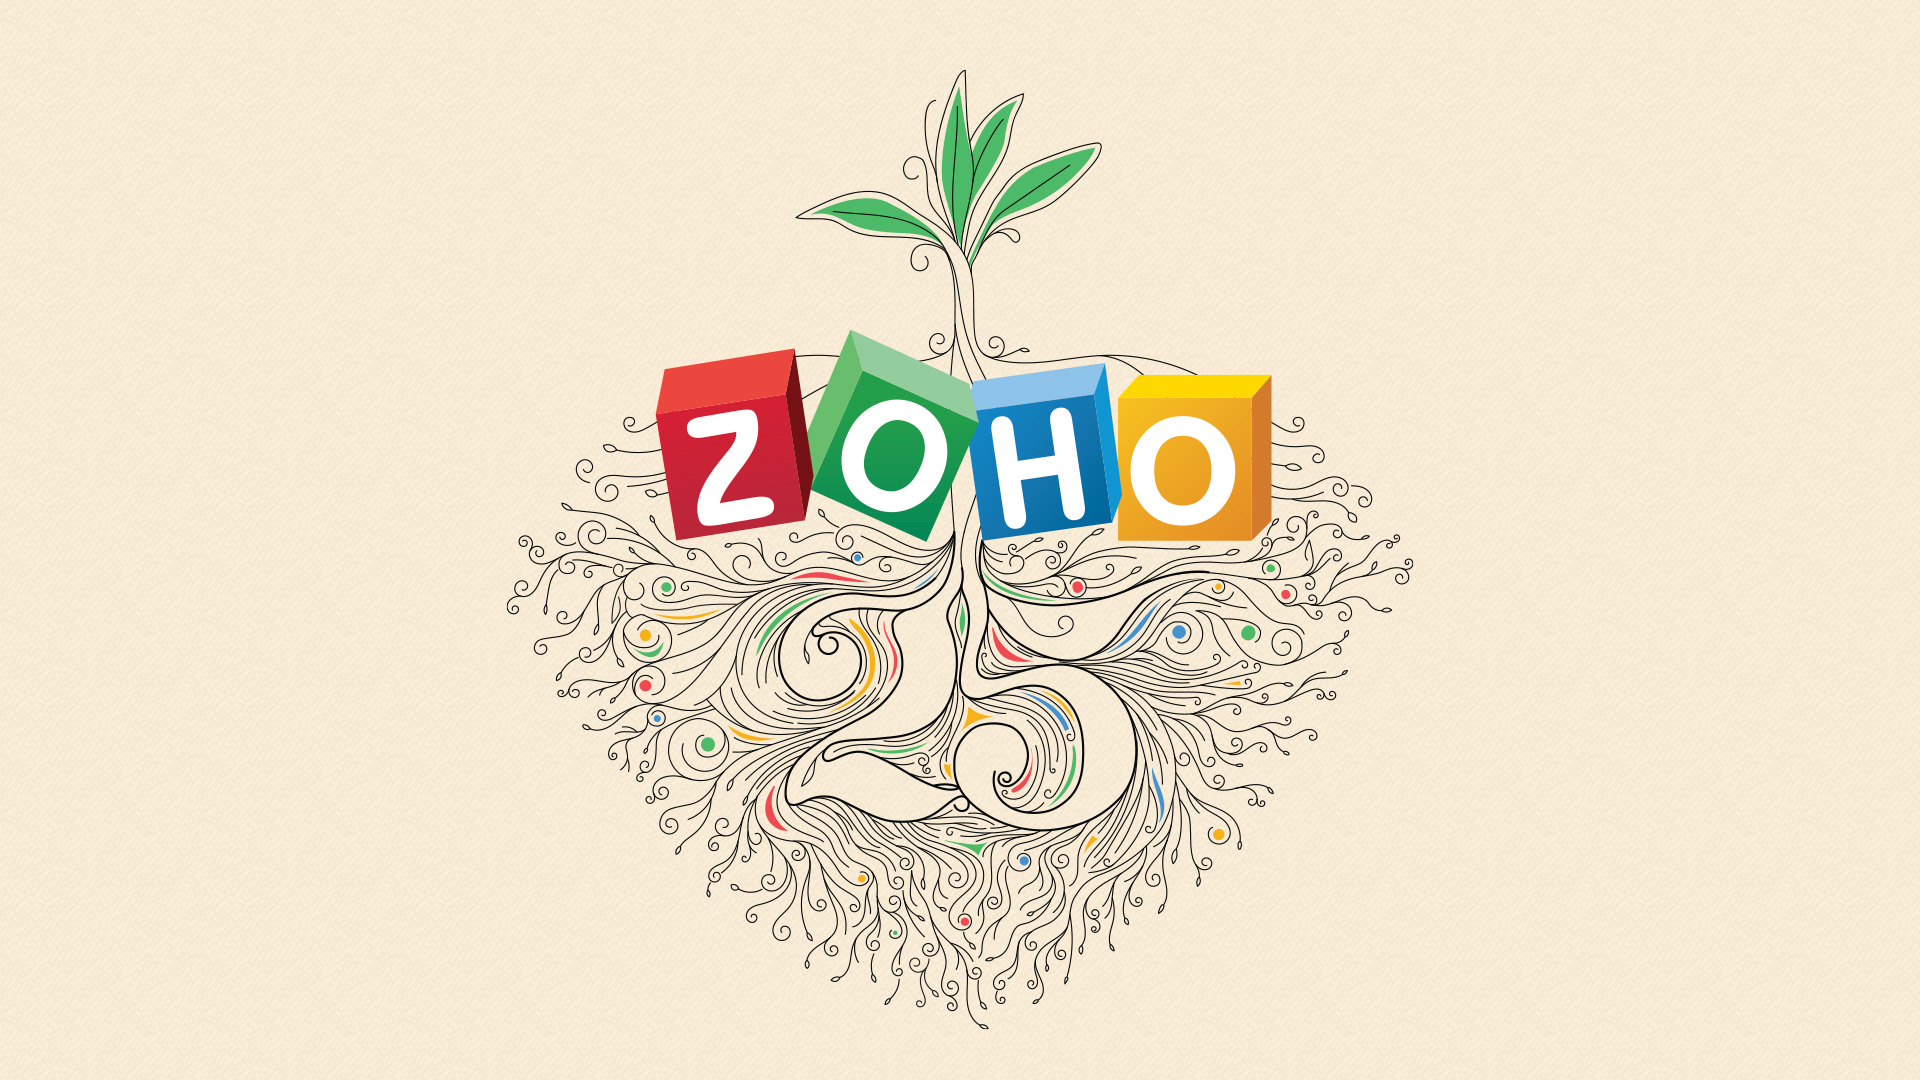 ٢٥ سنة من زوهو Zoho